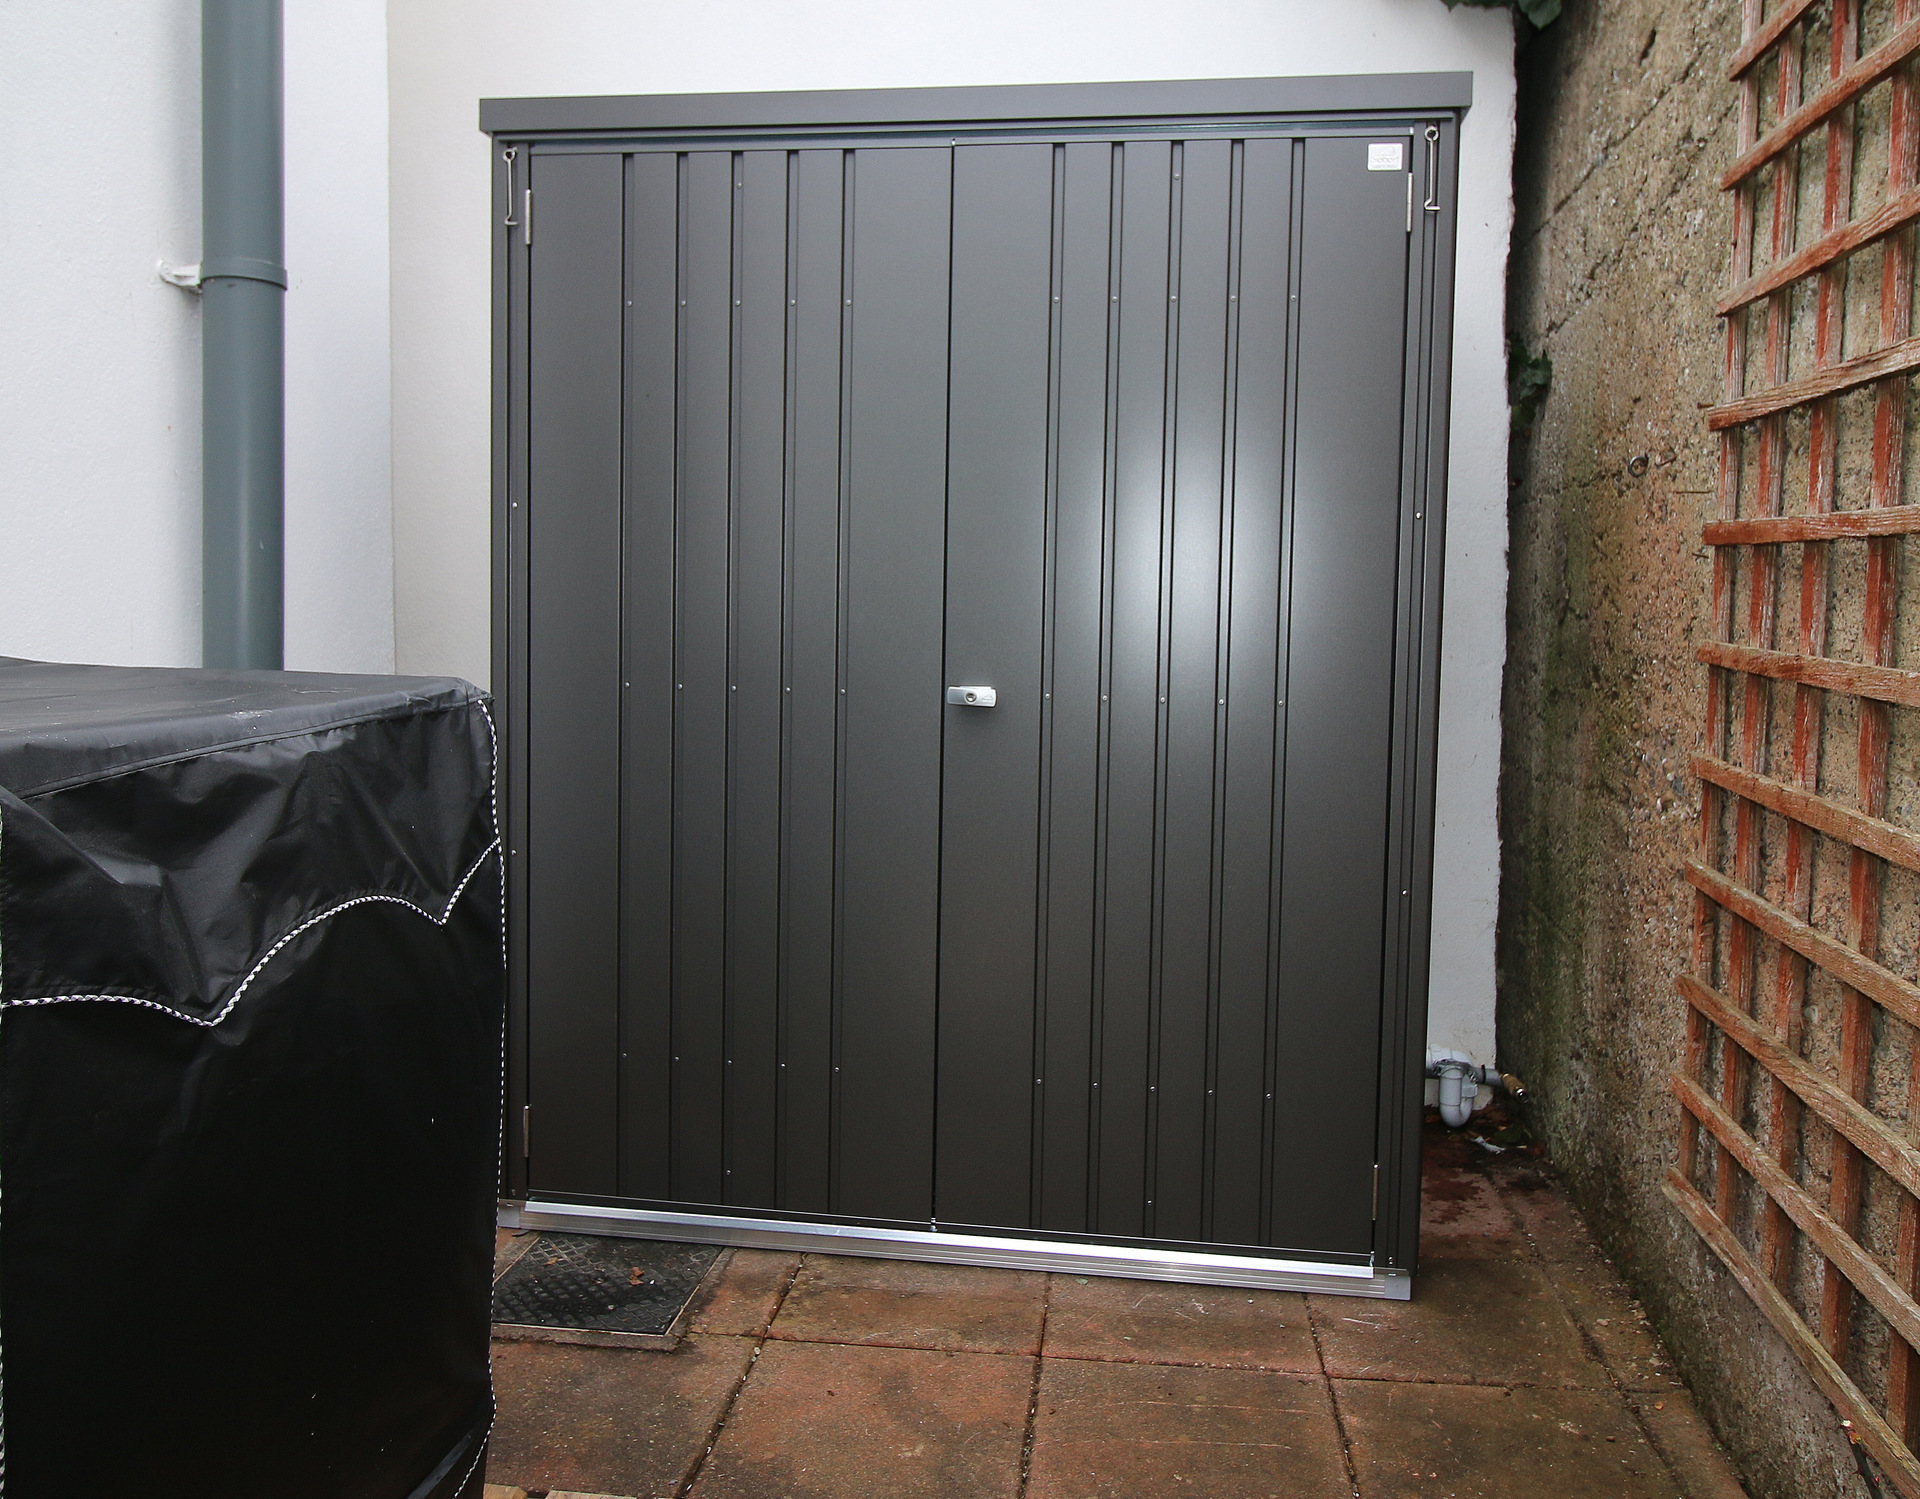 Biohort Equipment Locker 150 in metallic dark grey, supplied + fitted in Donnybrook, Dublin 4 | Stylish, Versatile, Secure & Rainproof Patio Storage Solutions | FREE Fitting